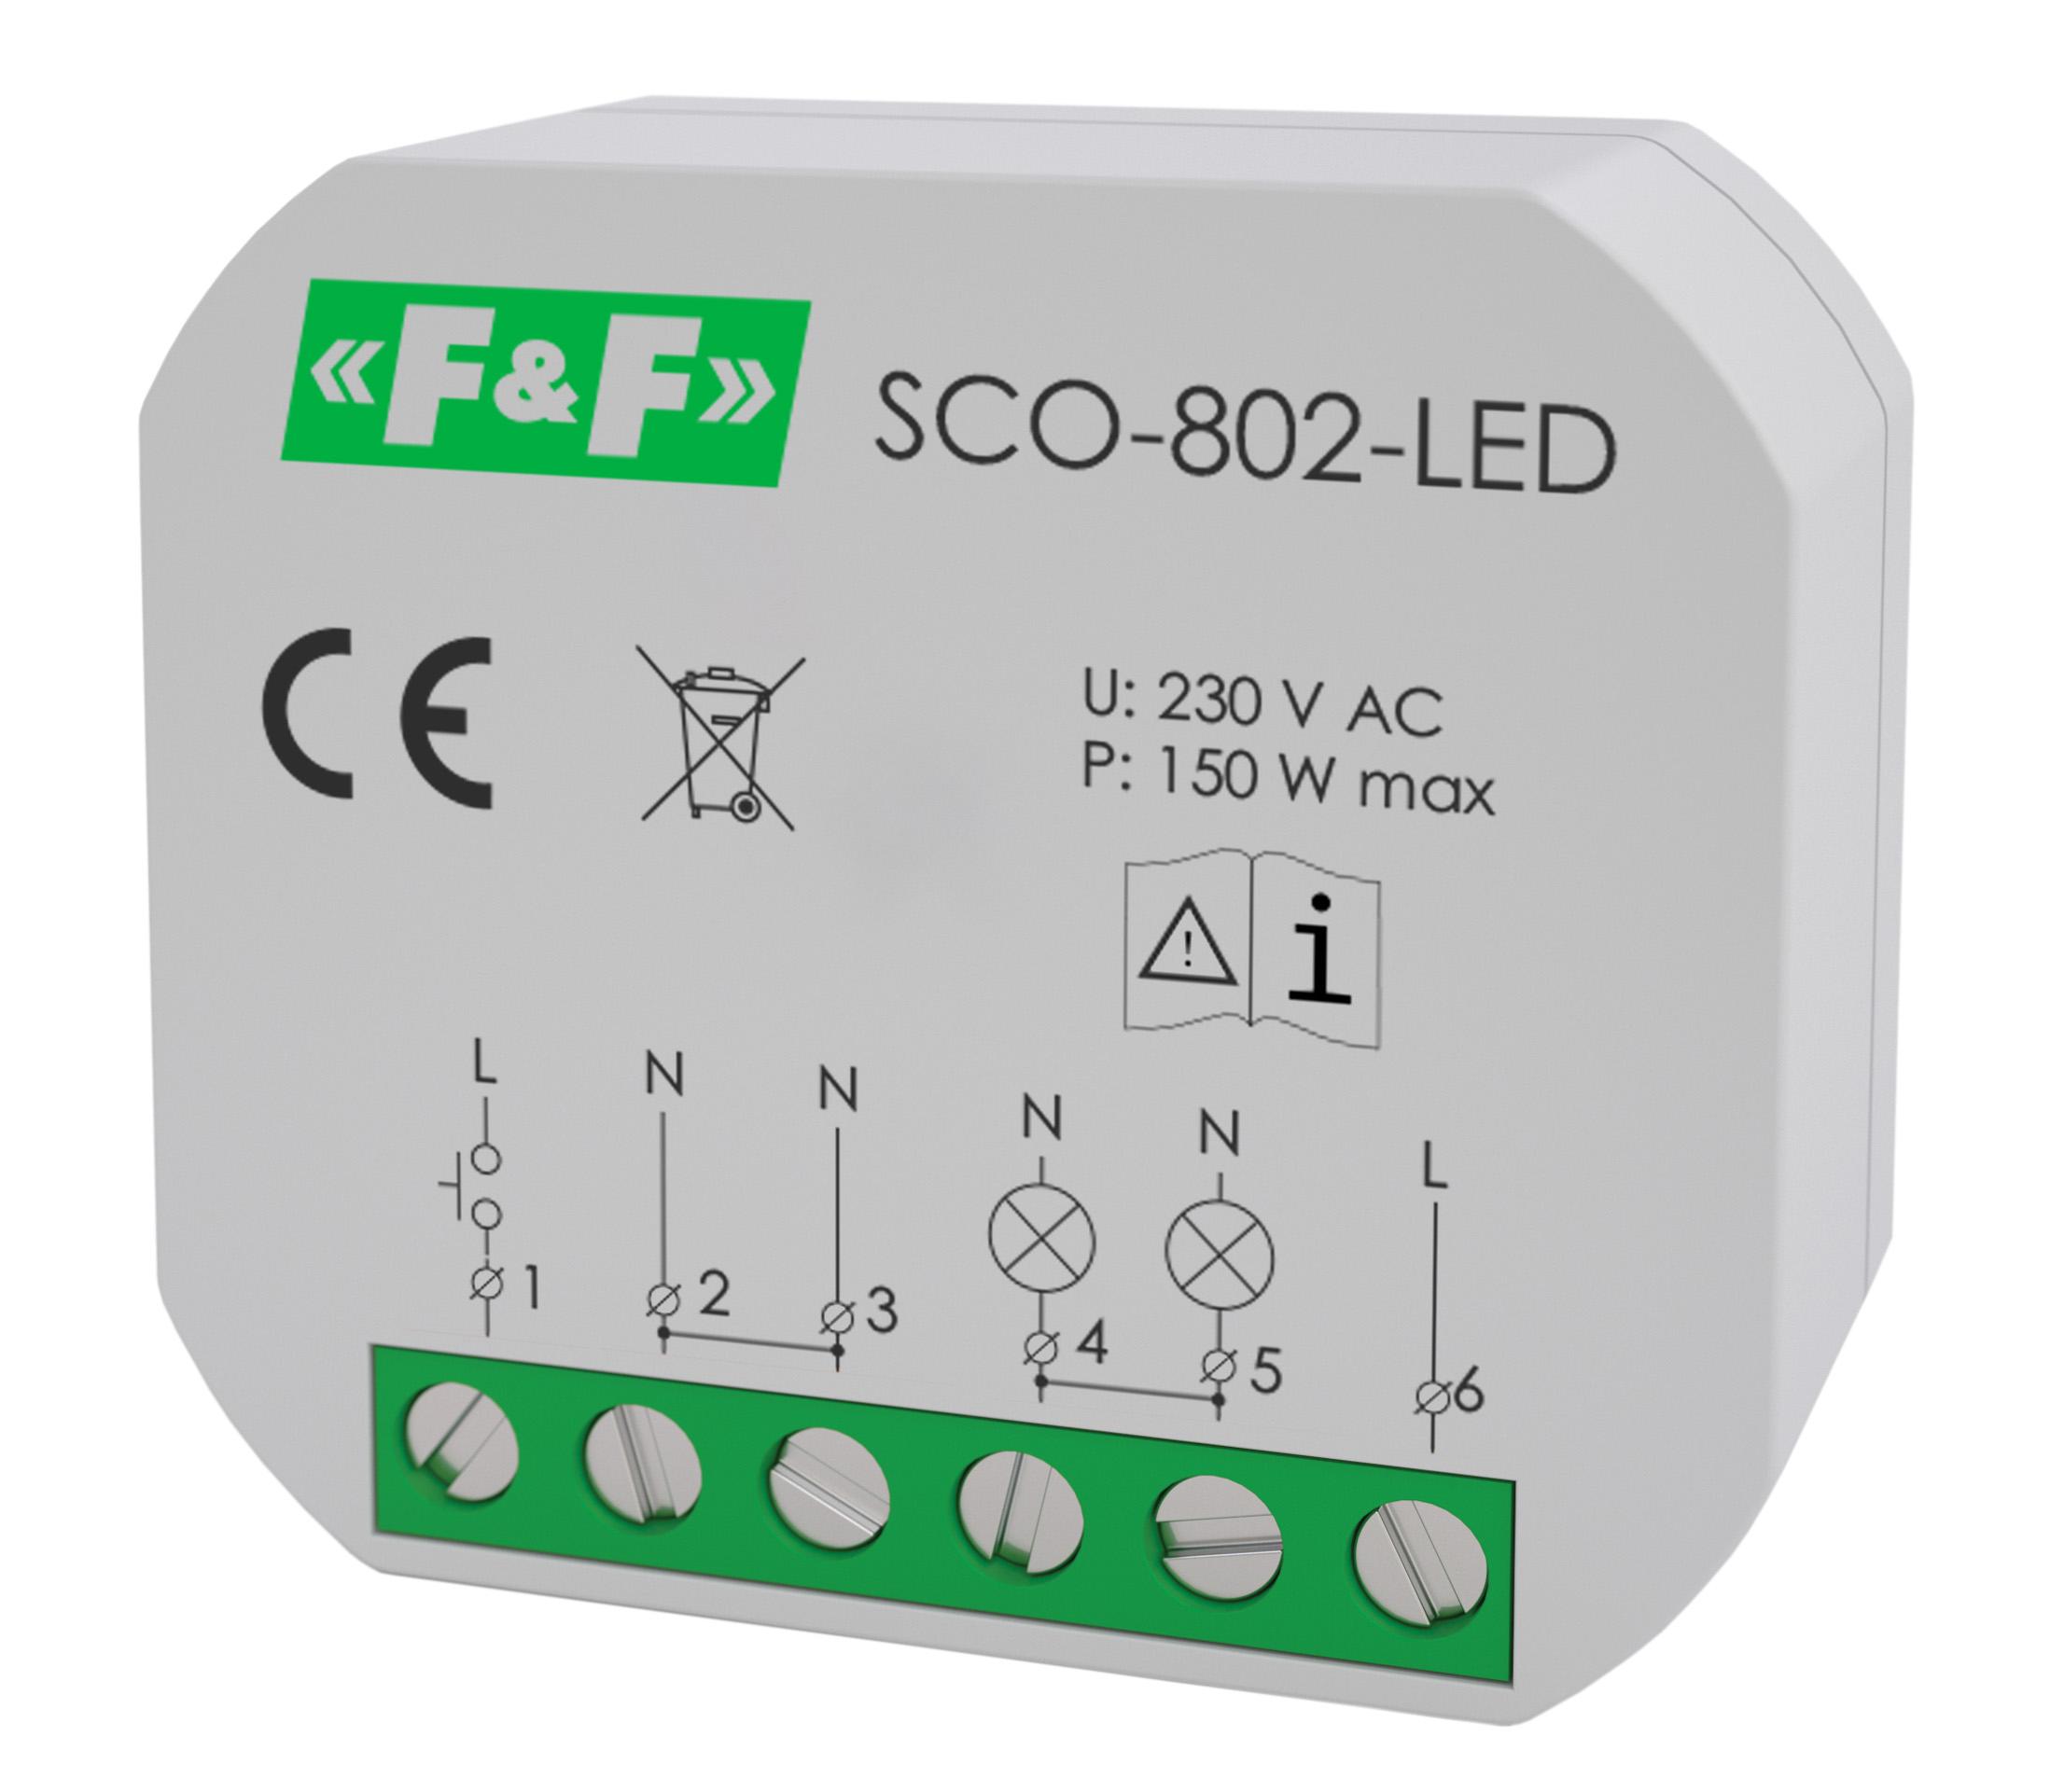 Kijker Frustratie Veroorloven Lighting dimmer SCO-802-LED 230 V